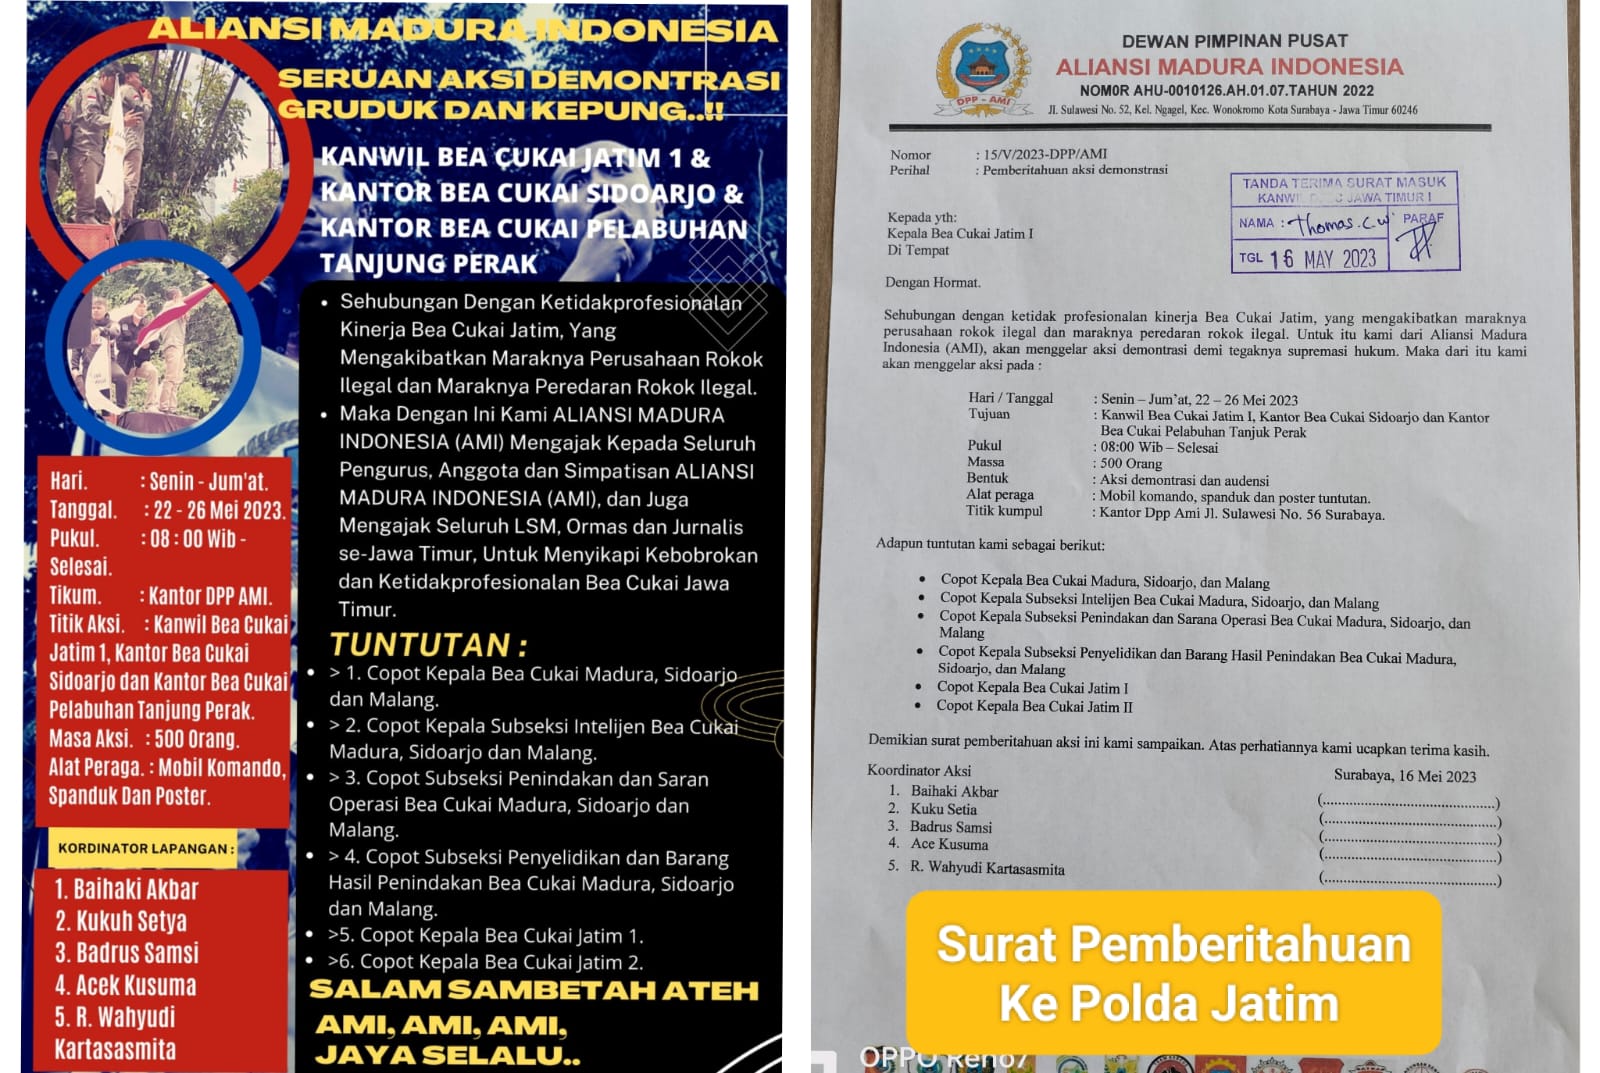 Kantor Wilayah Bea Cukai Sidoarjo Dan Pelabuhan Tanjung Perak, Senin Depan Akan Digruduk Aliansi Madura Indonesia dan Organisasi Gabungan